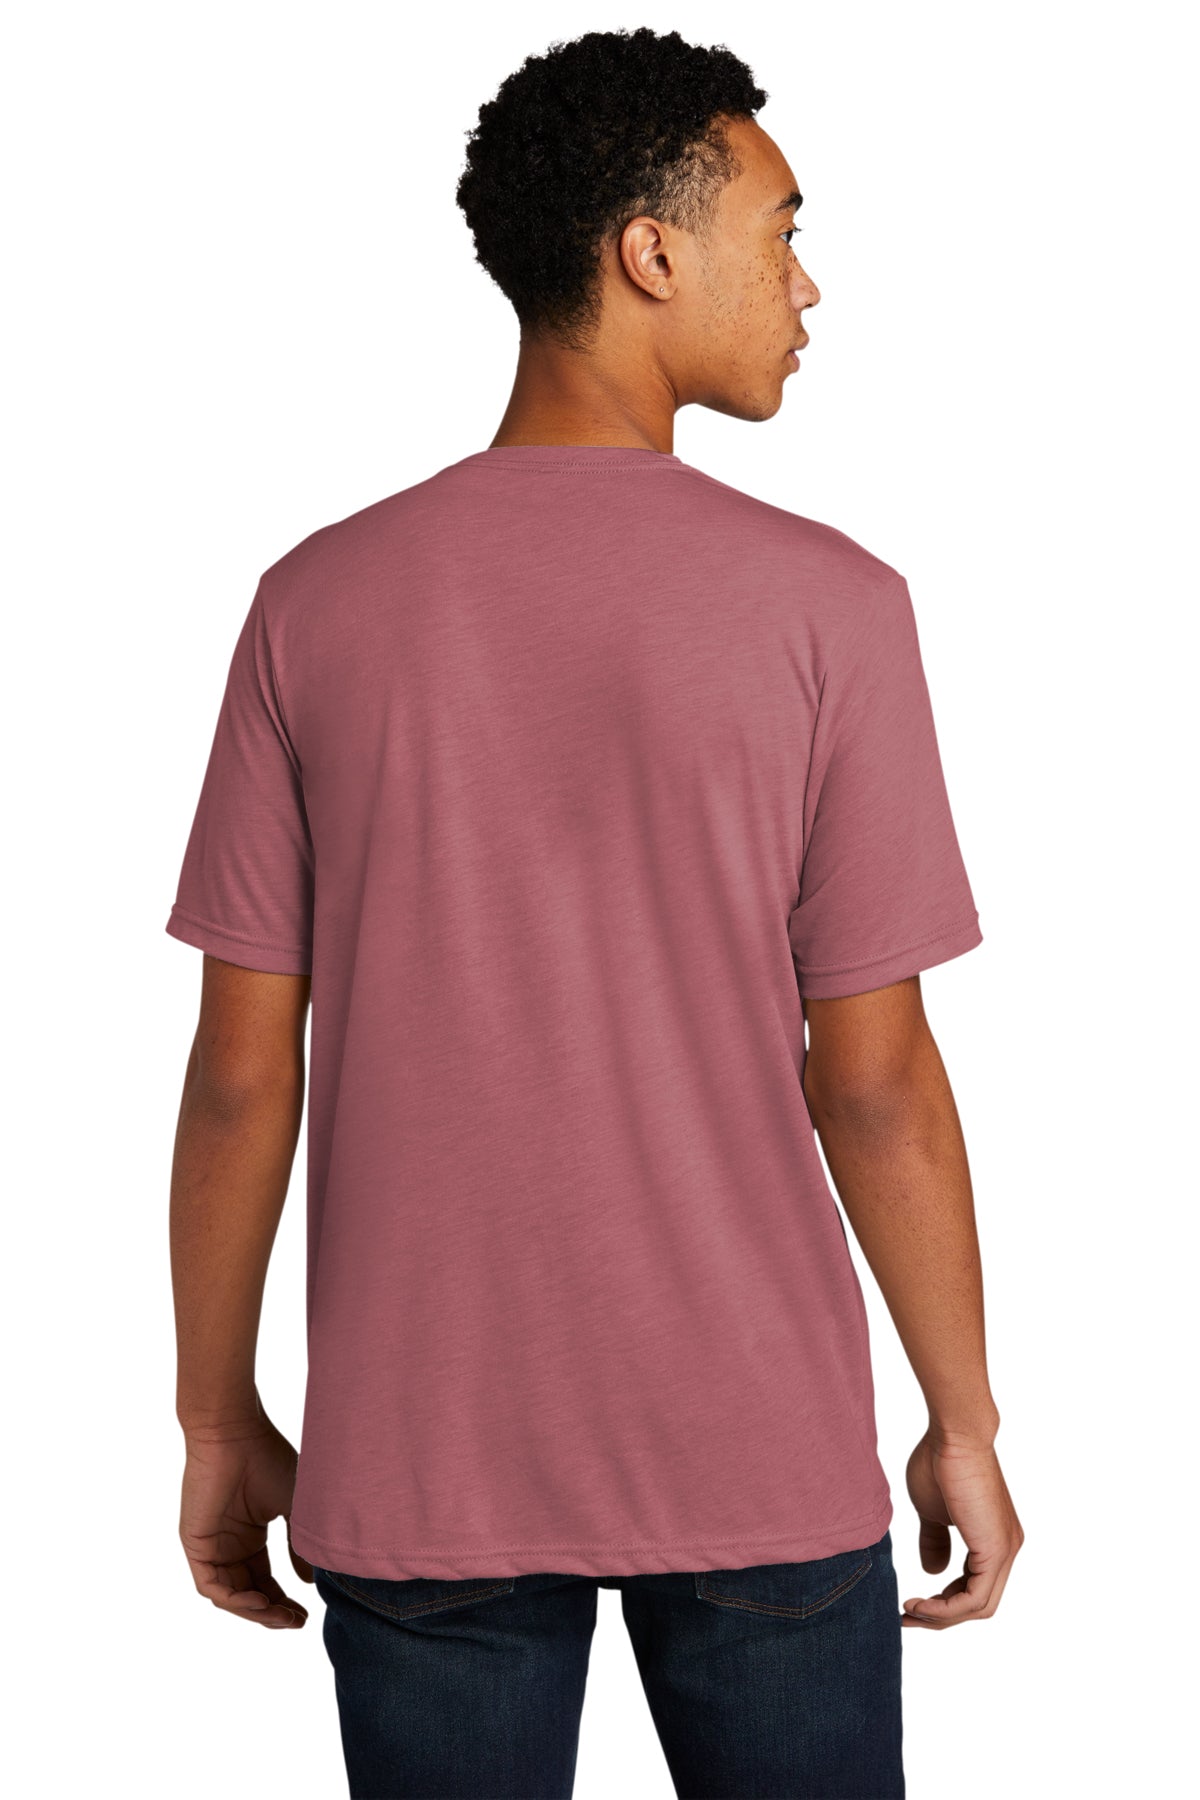 Next Level Unisex Poly Cotton Custom T-Shirts, Smoked Paprika